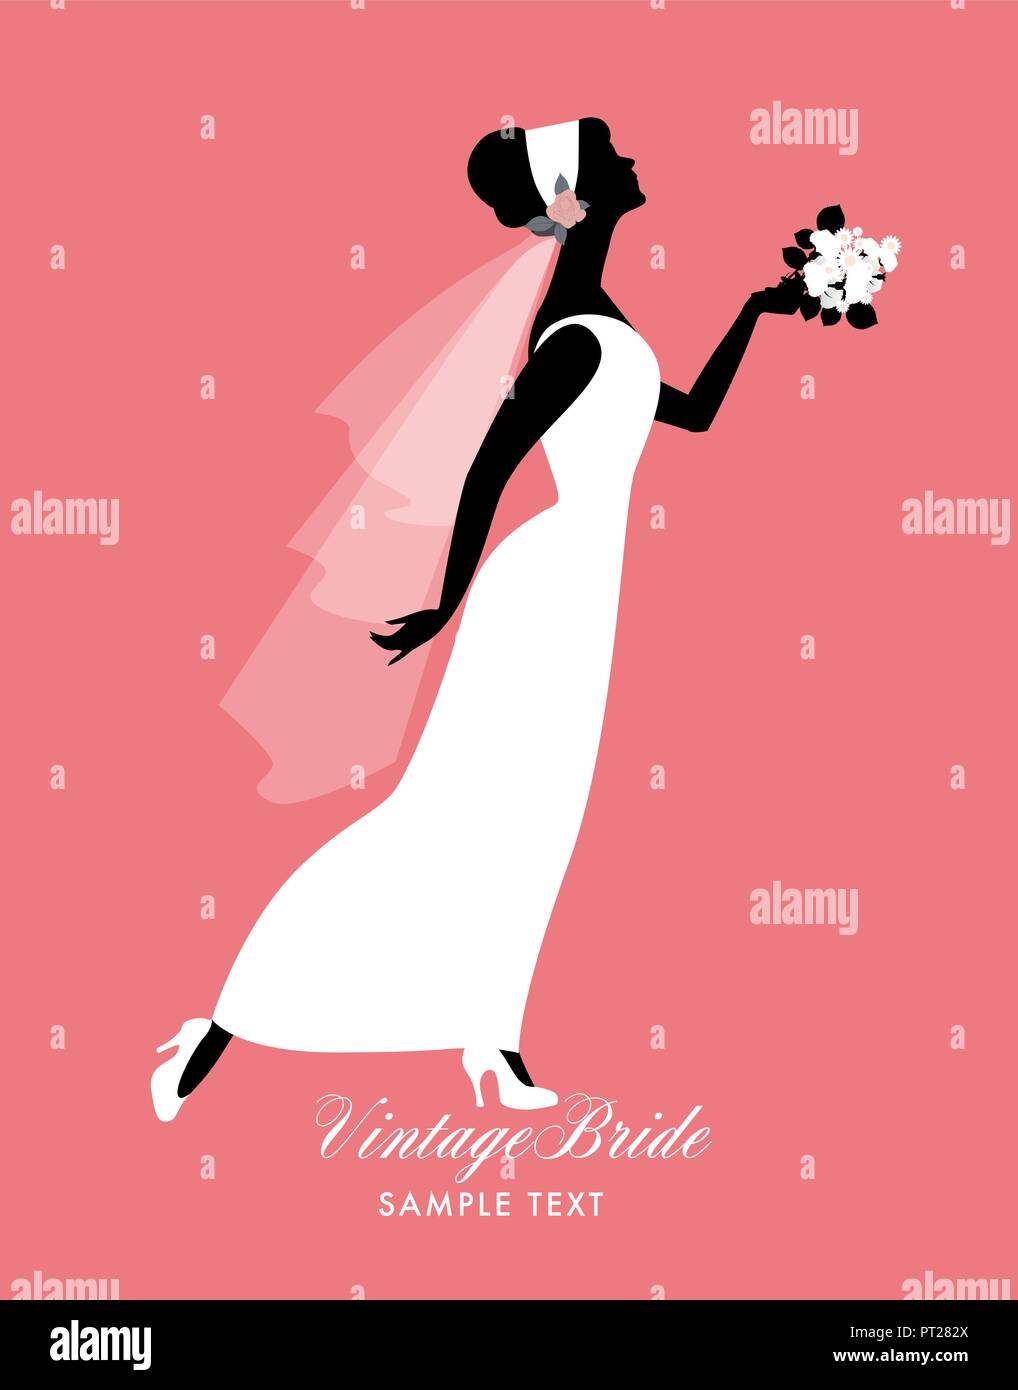 vintage bride silhouette